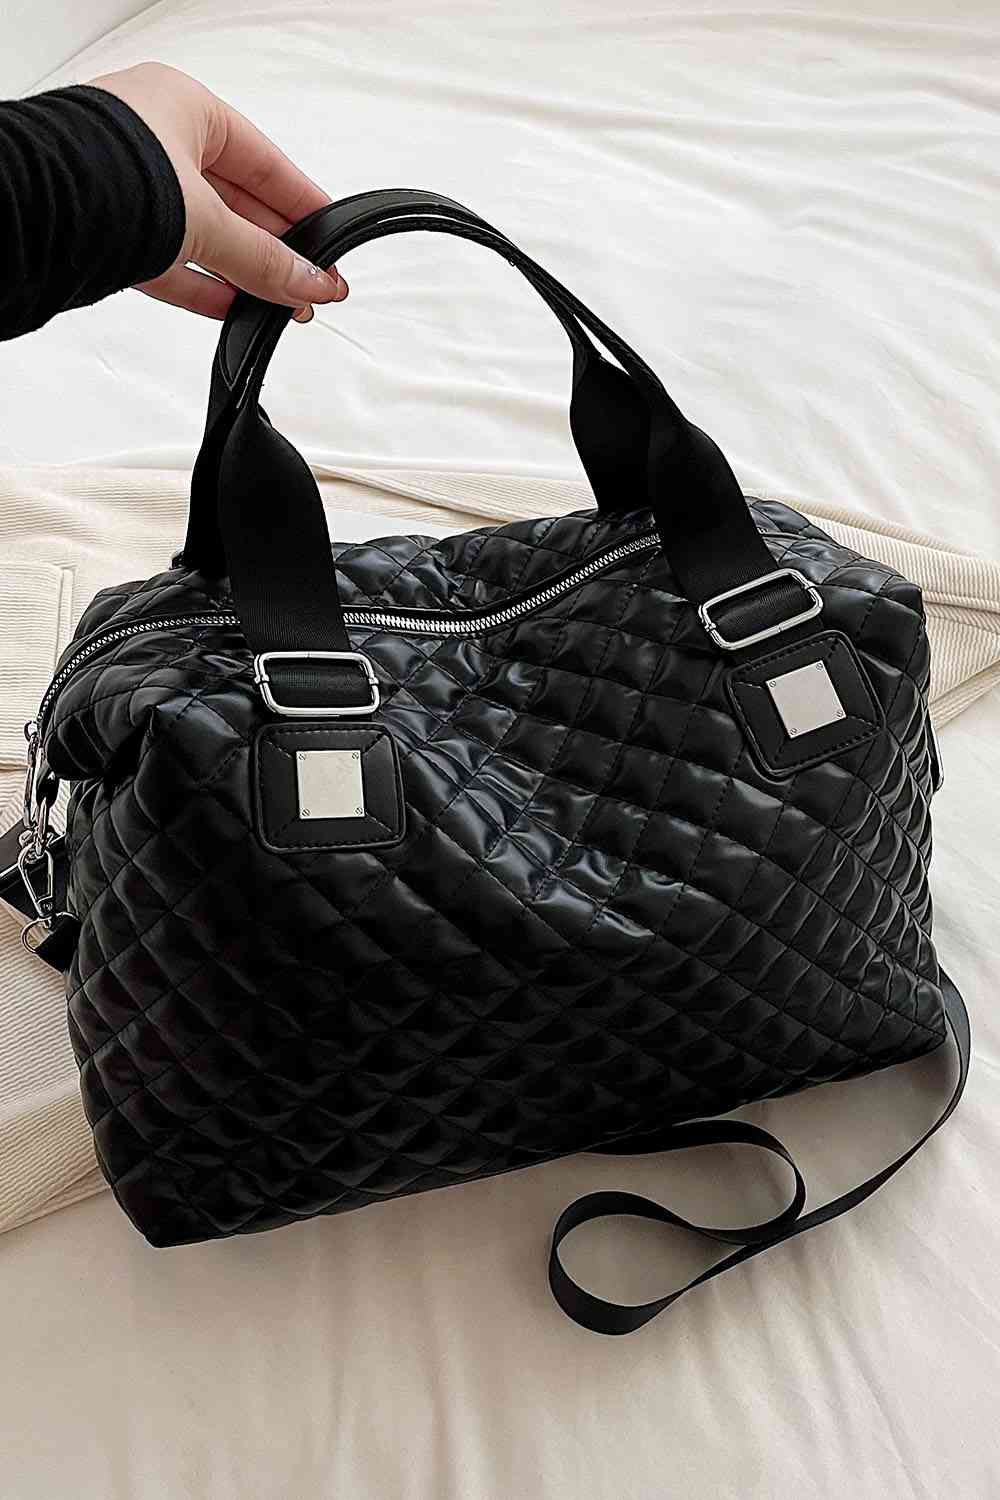 Black Women's PU Leather Handbag